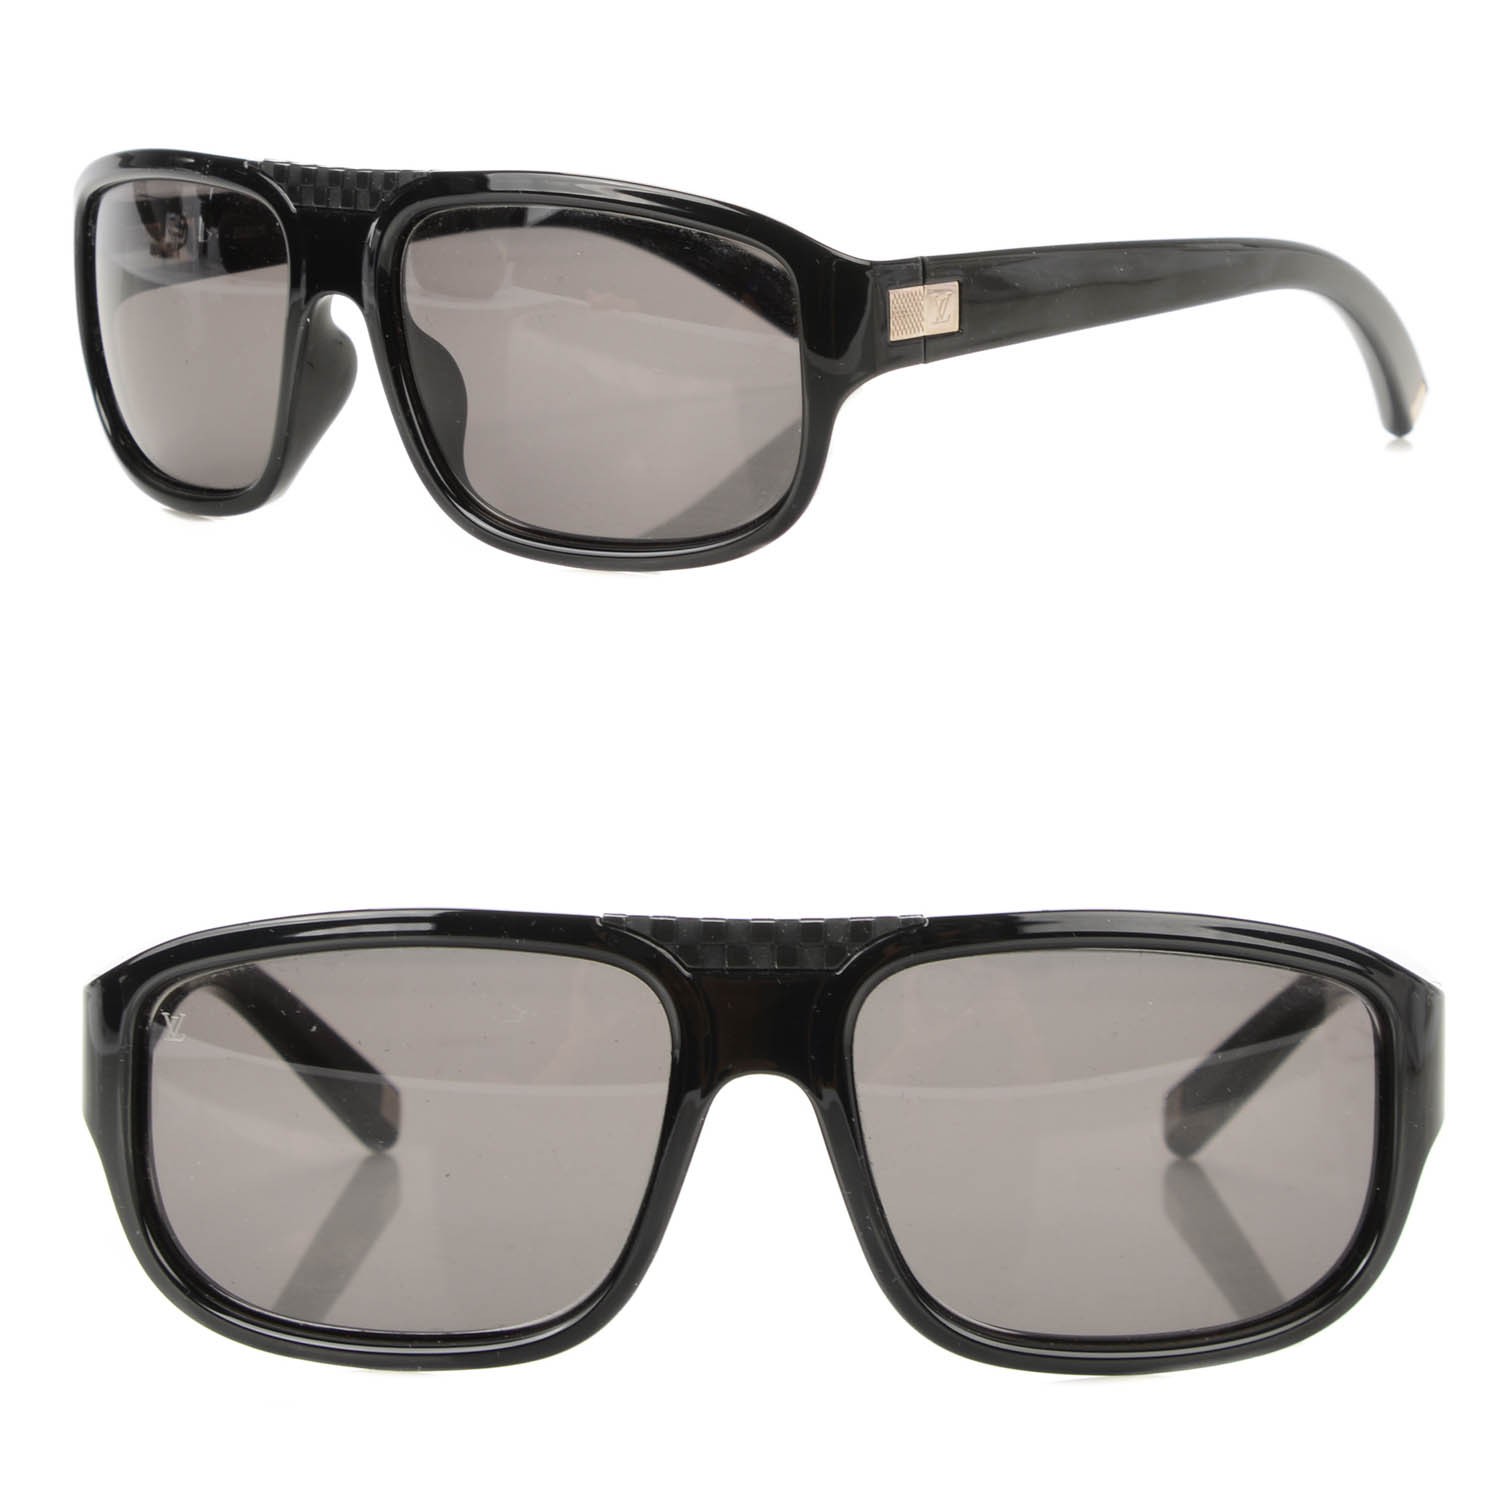 Louis Vuitton - Z0361U - Sunglasses - Catawiki